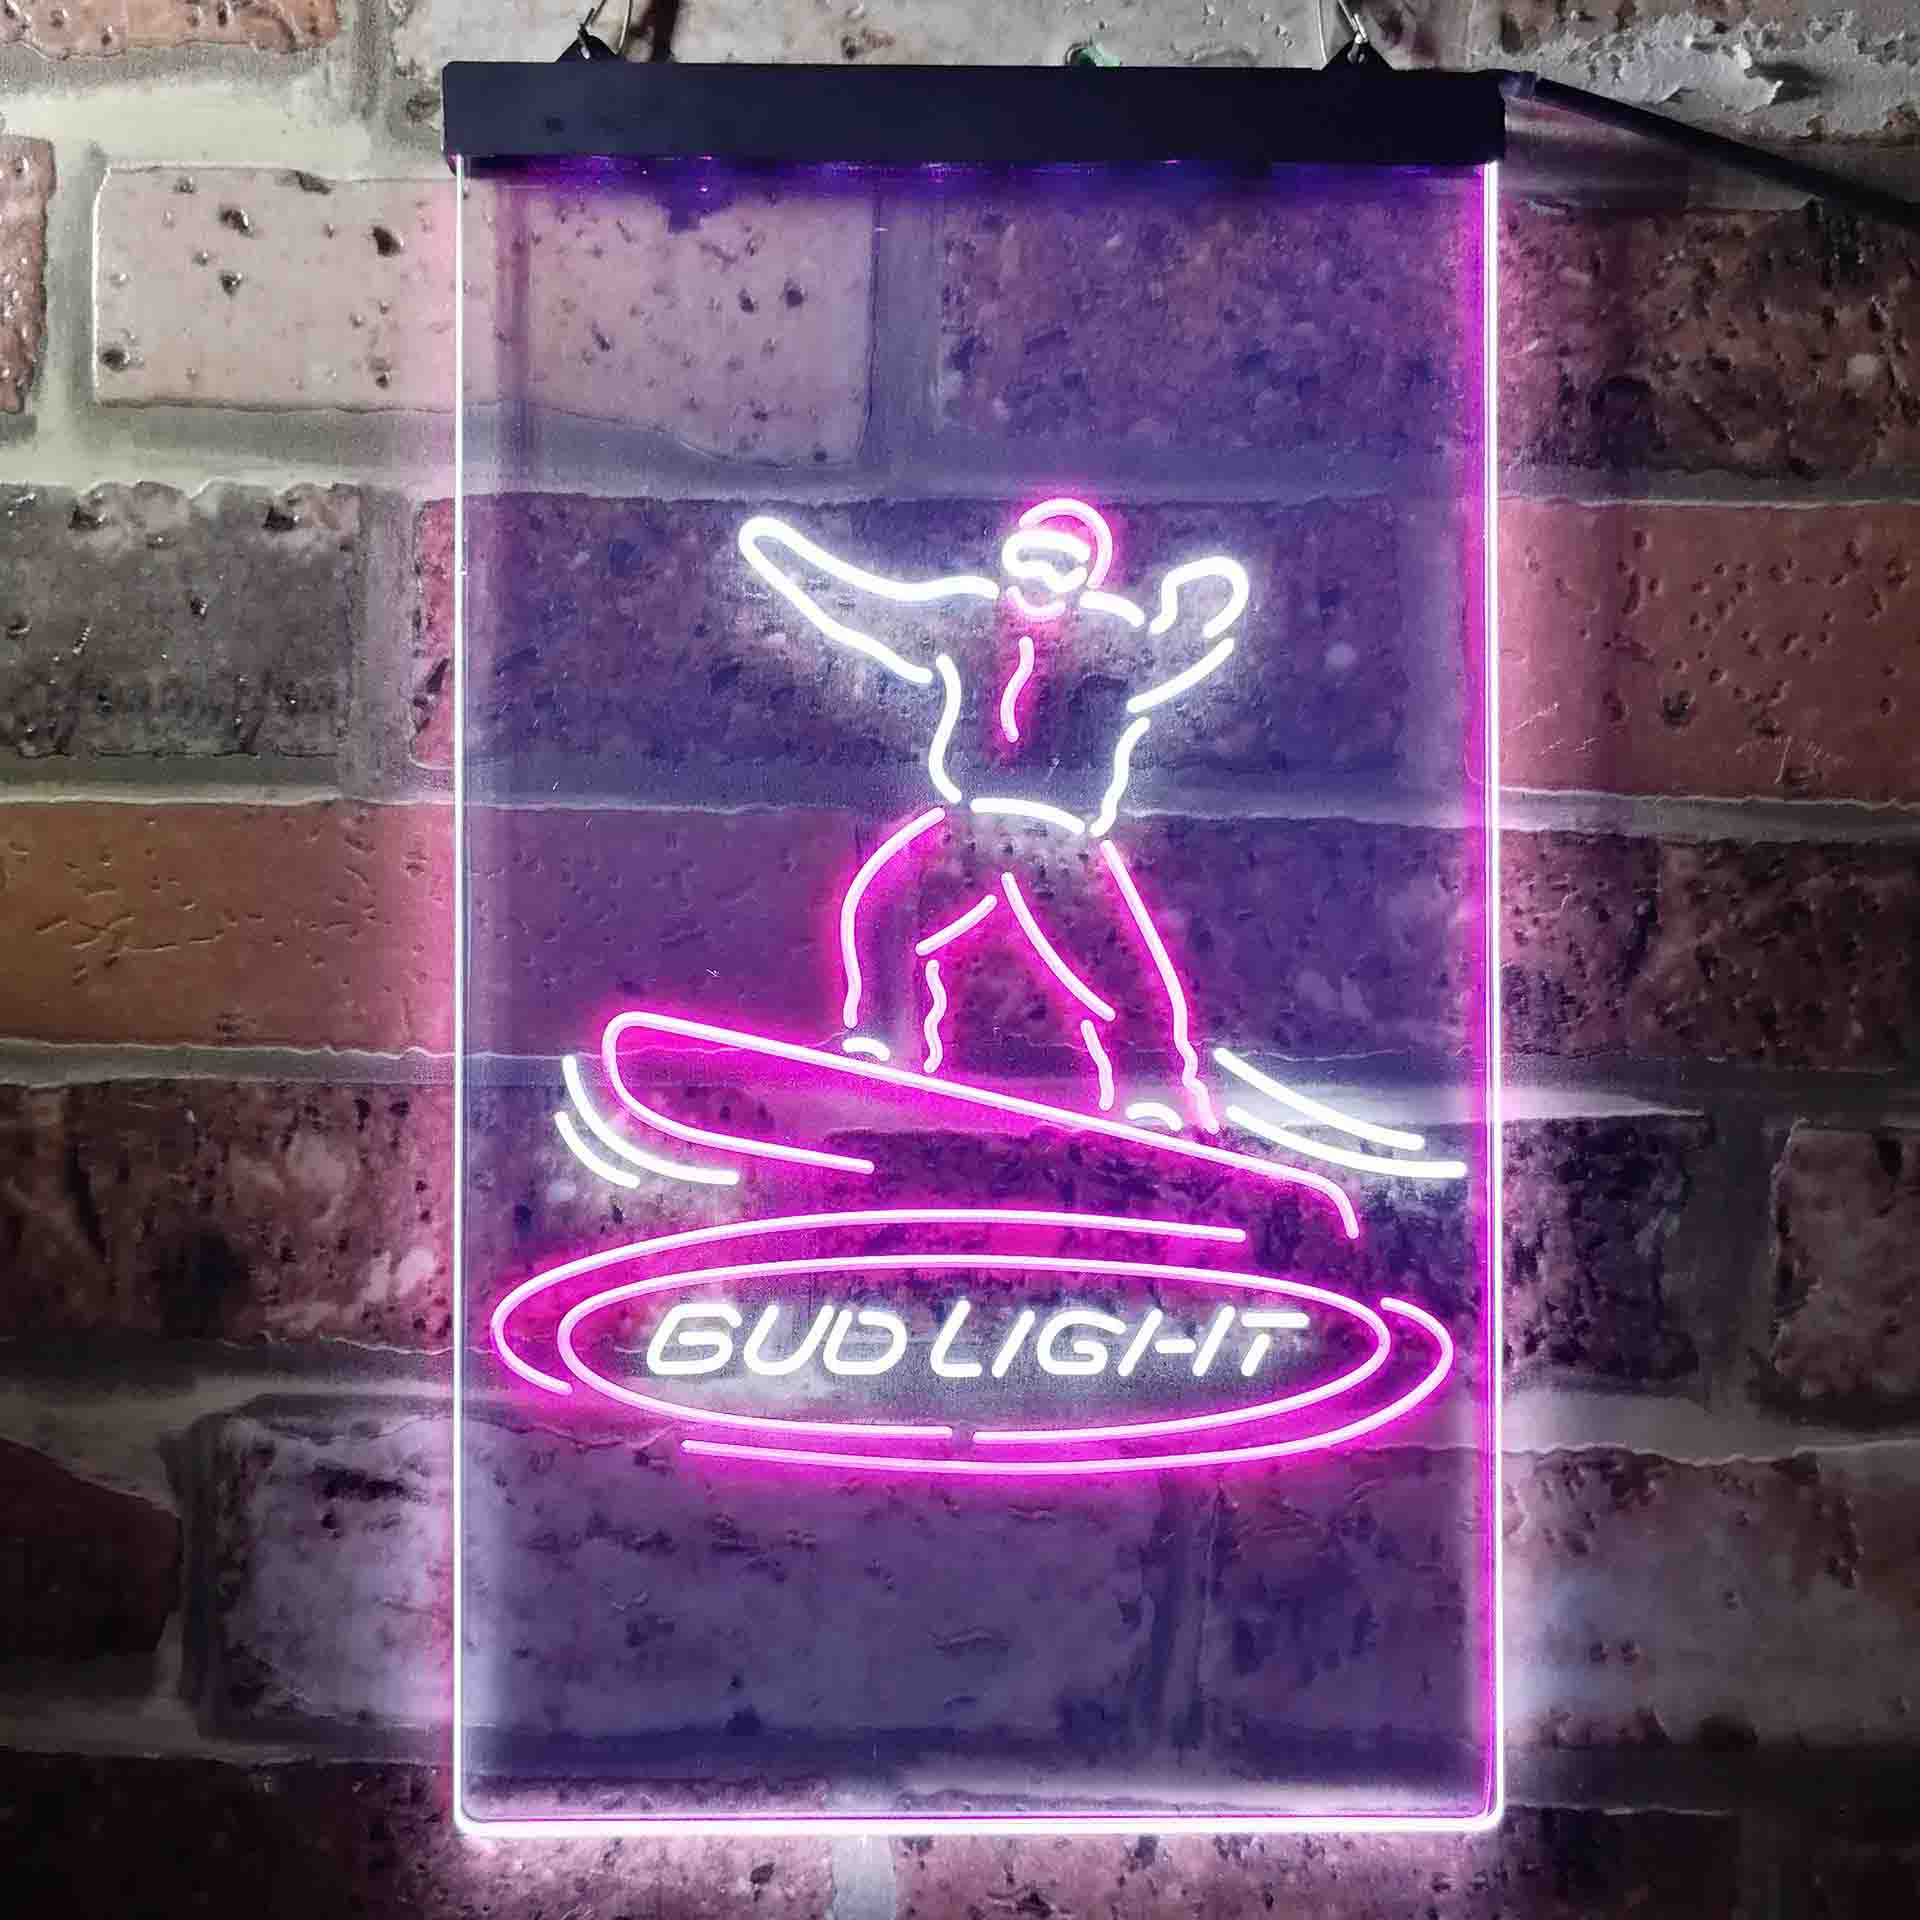 Bud Light Snowboarder Neon LED Sign